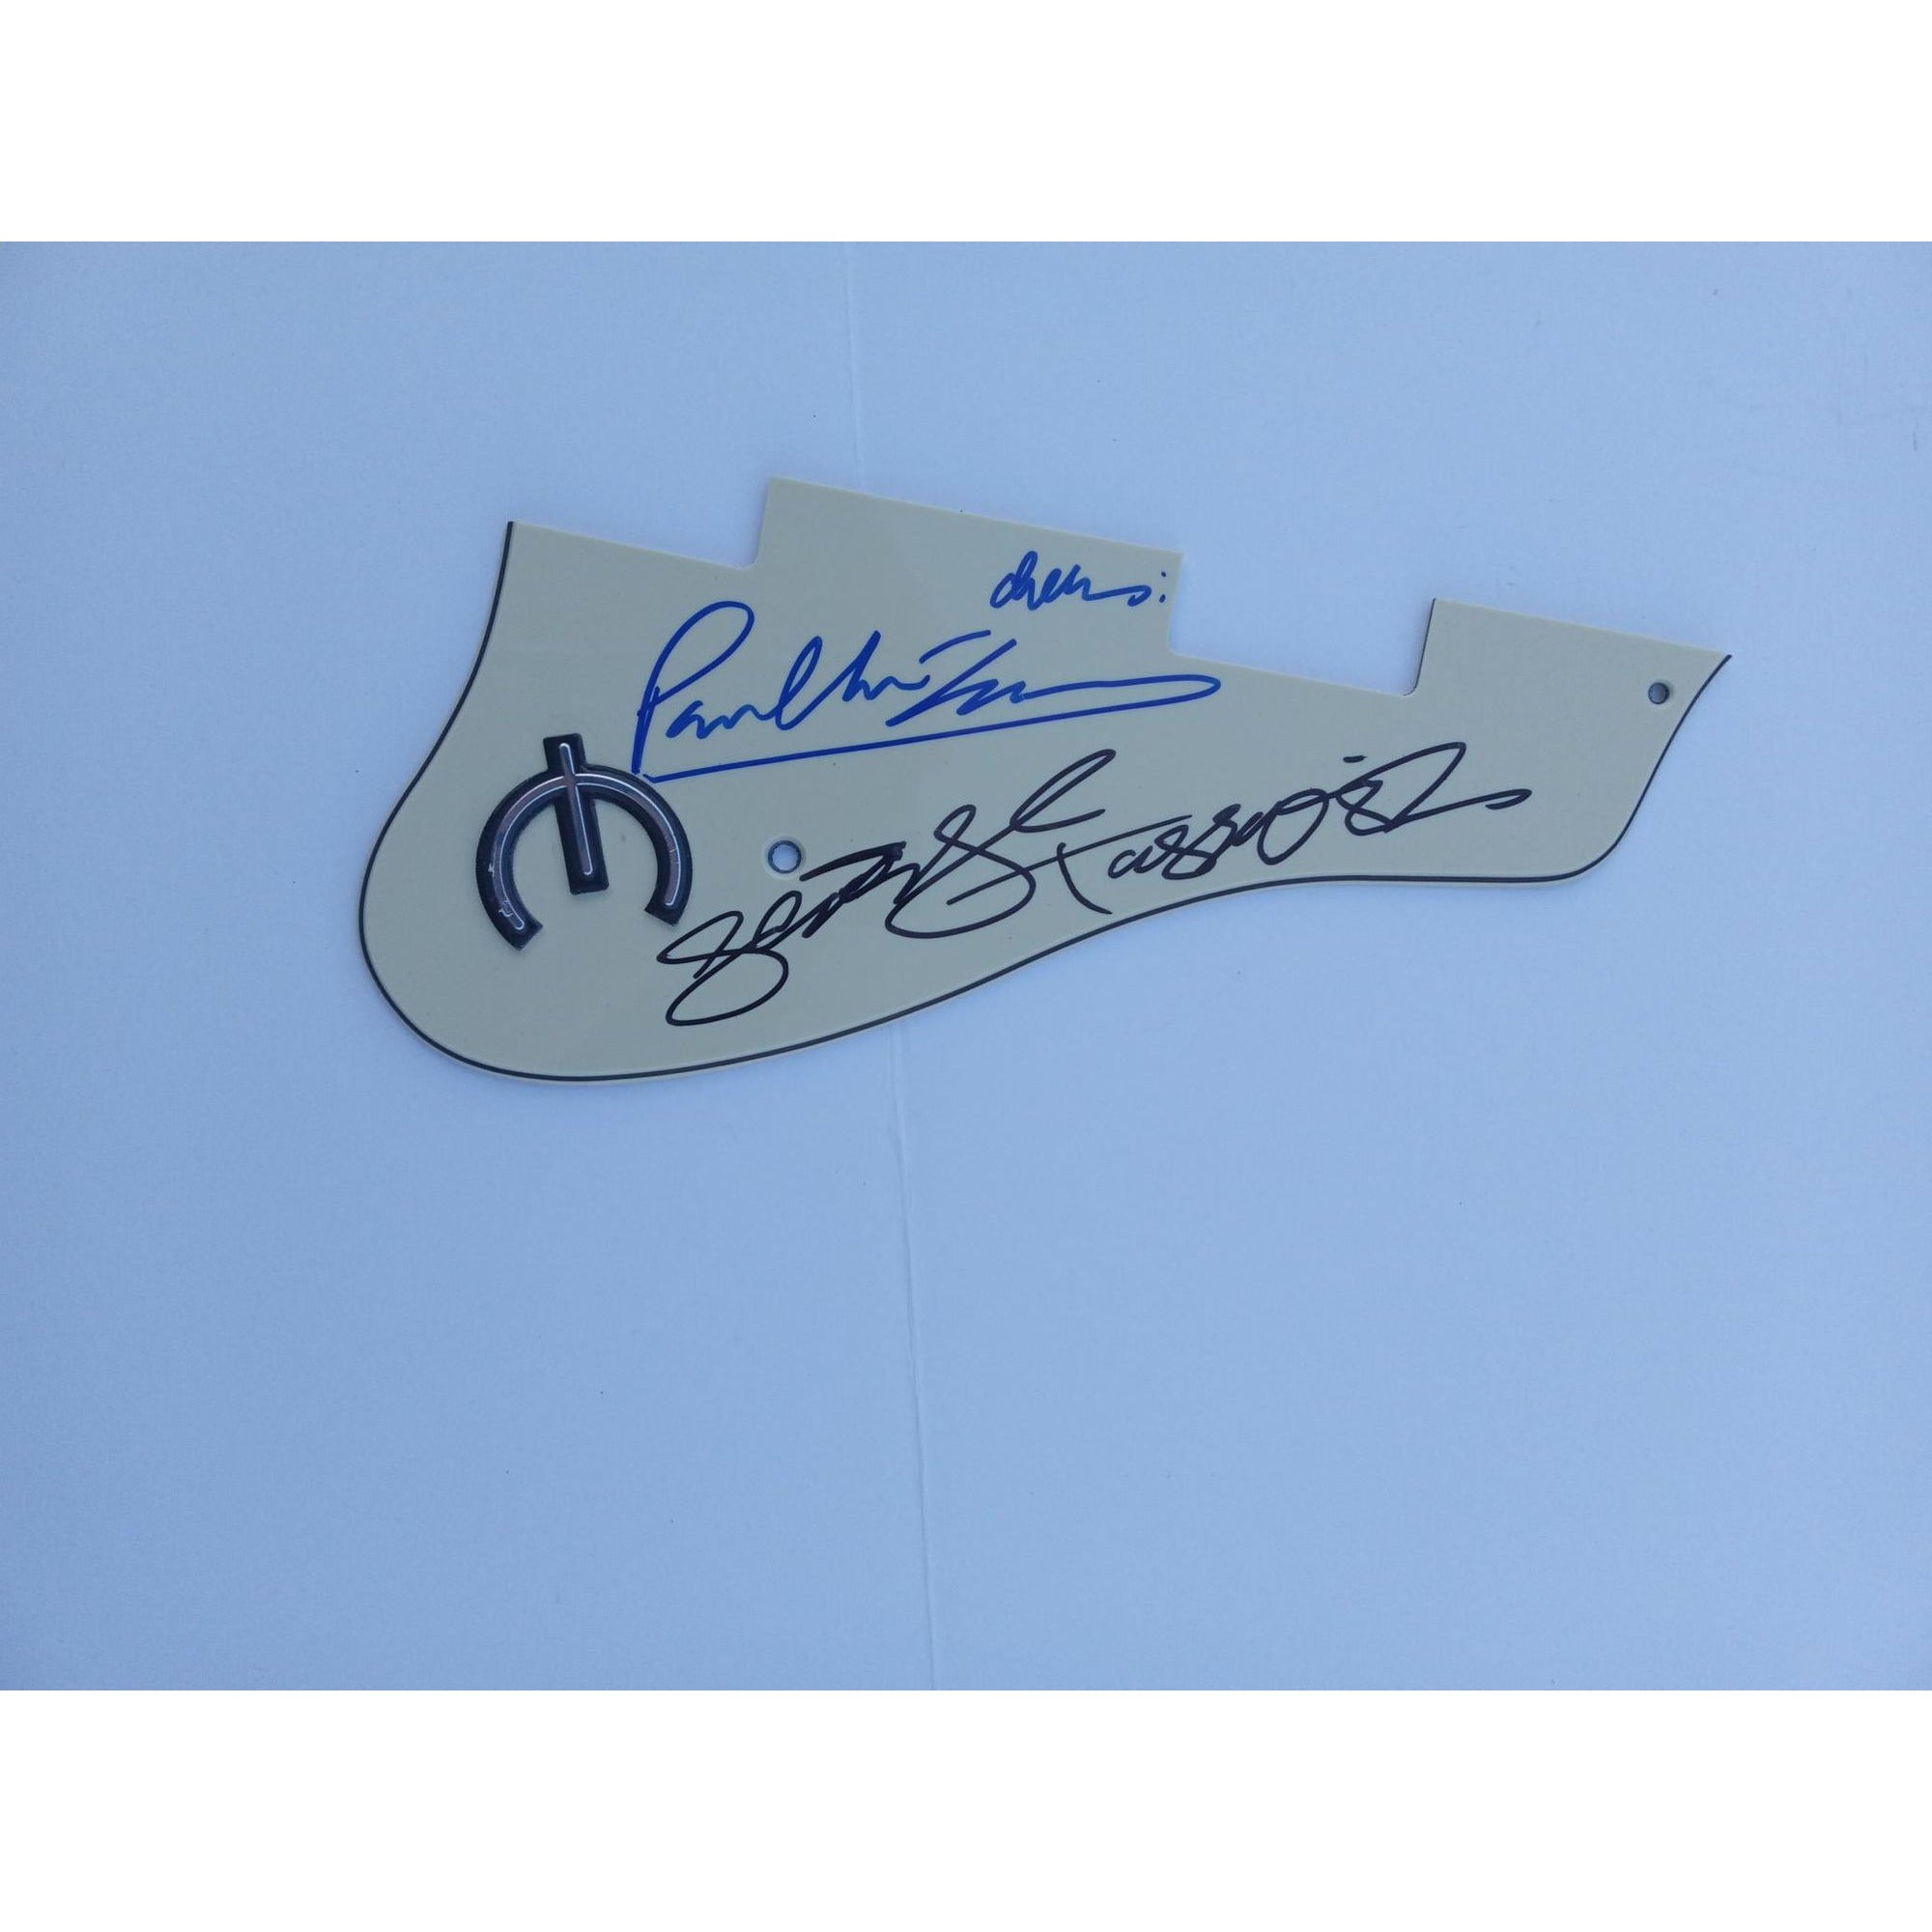 Paul McCartney and George Harrison Epiphone electric guitar pickguard signed